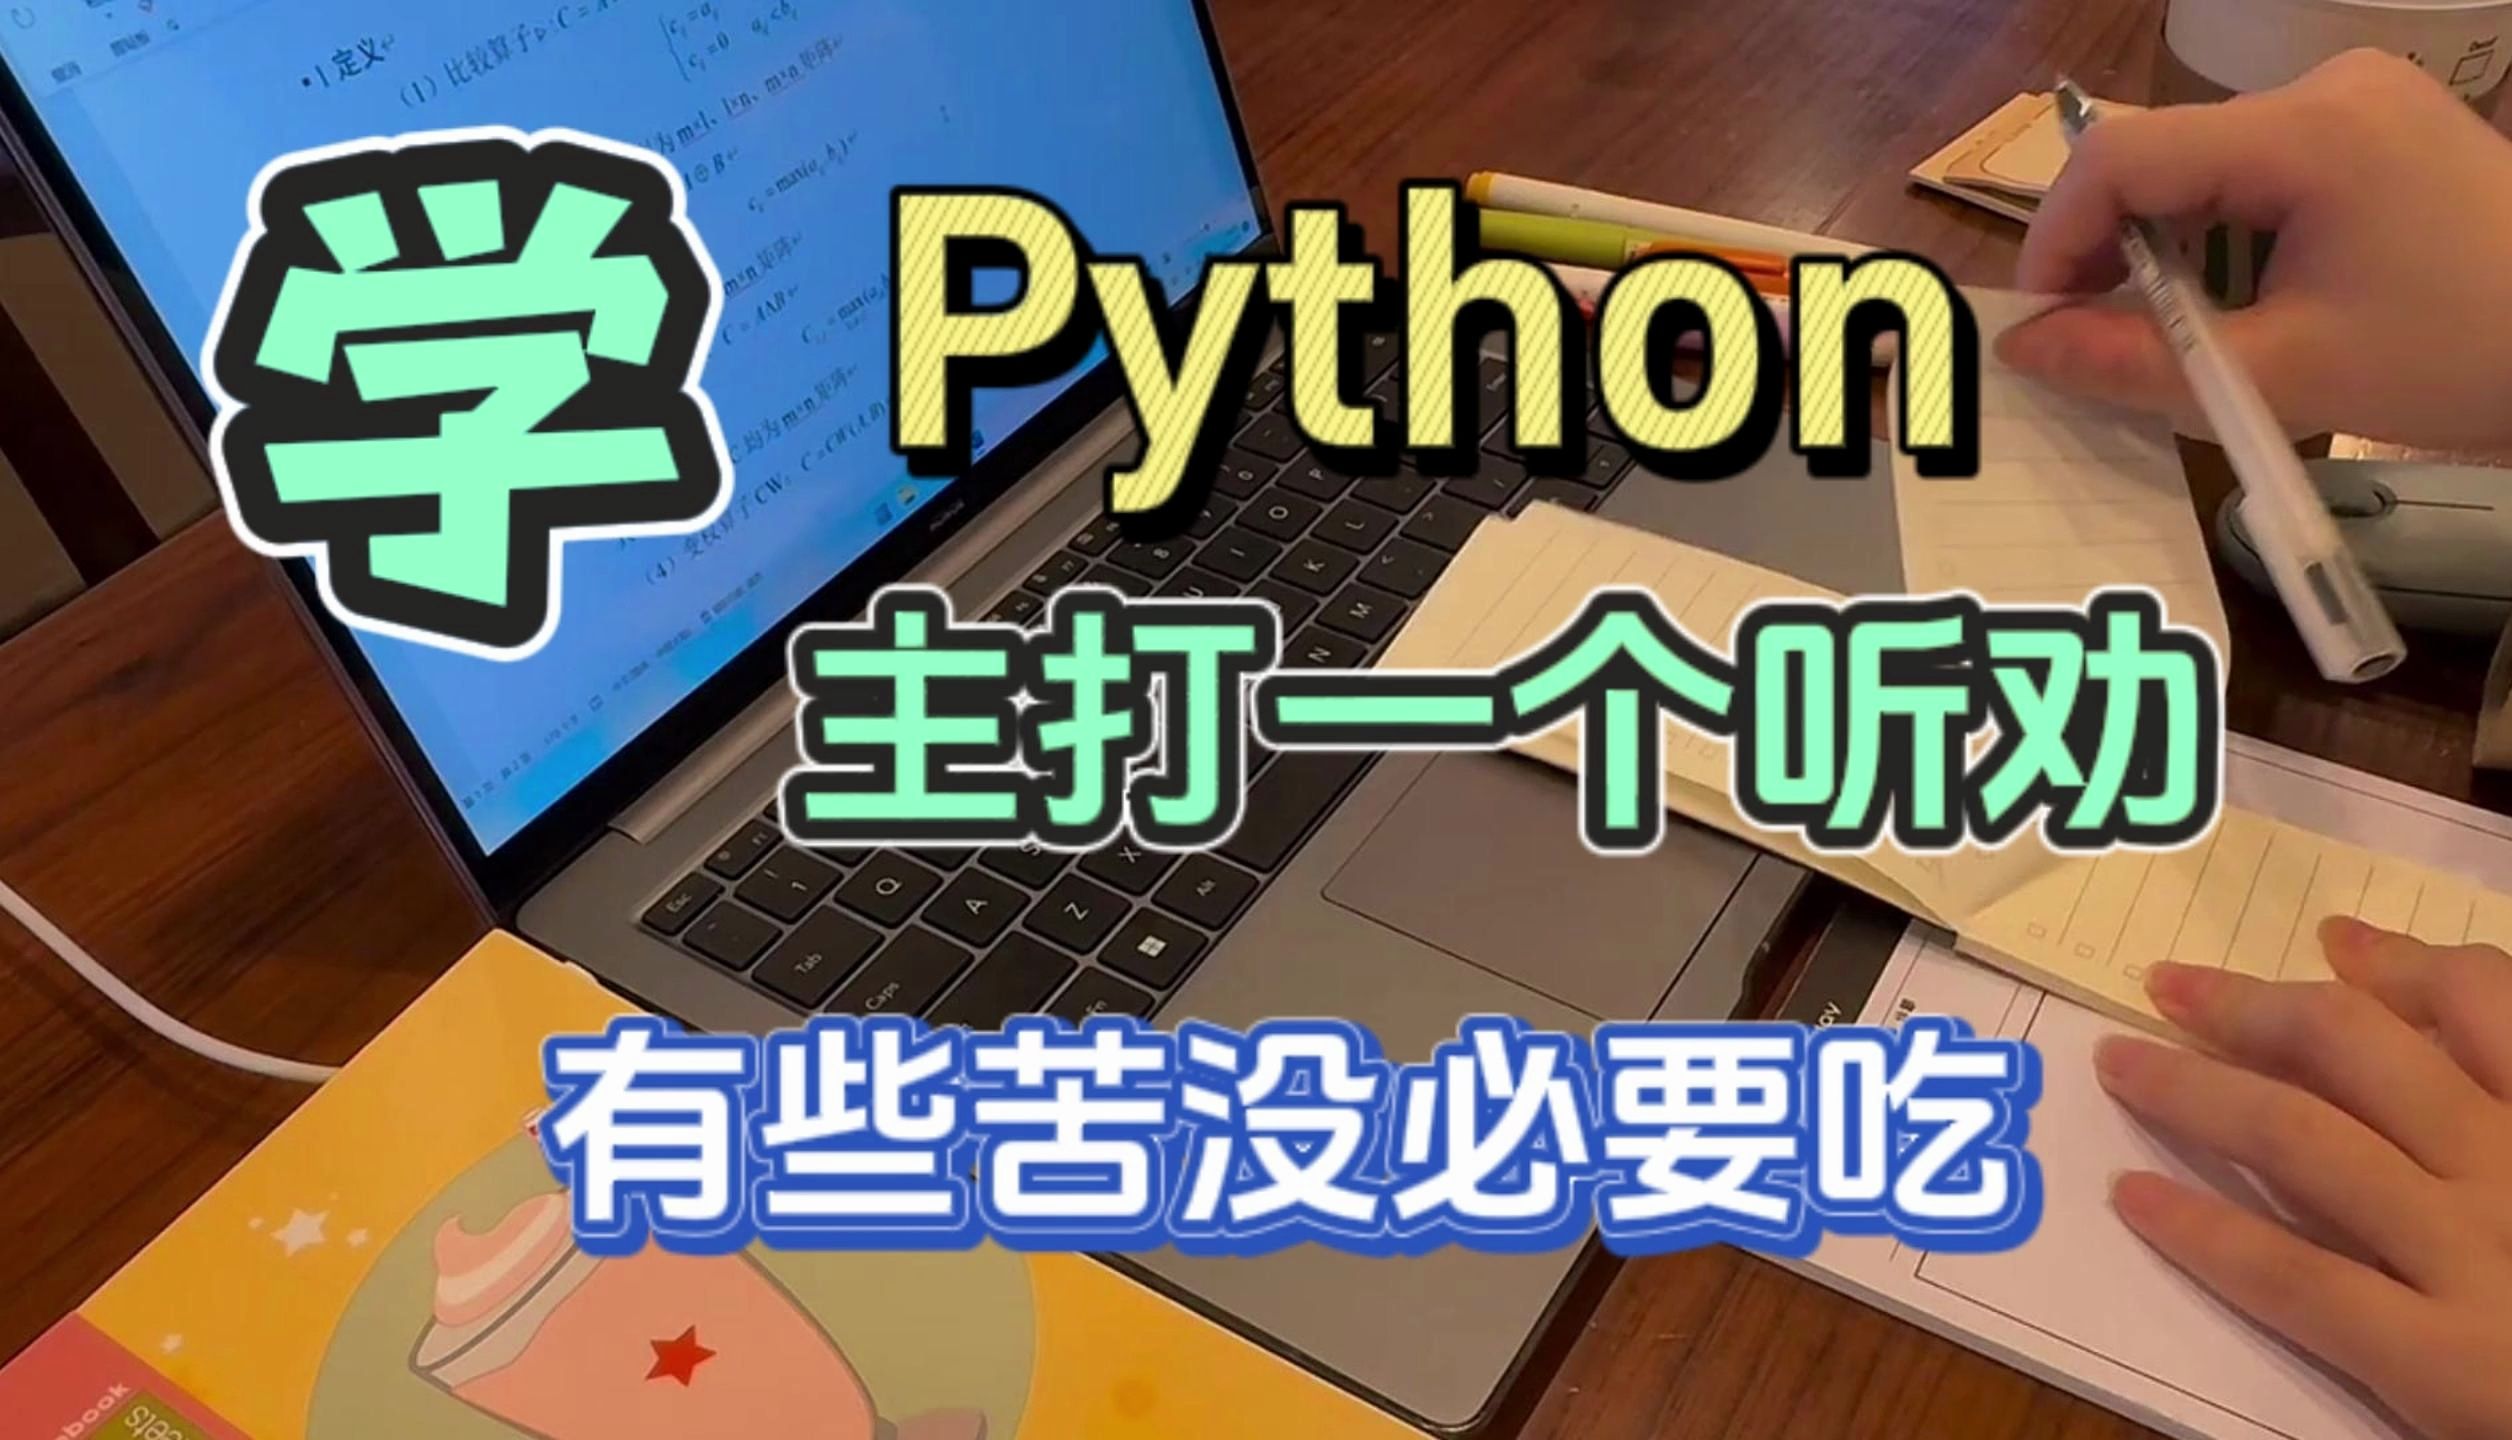 【Python学习】听我一句劝! 千万别盲目自学Python！后果真的很严重！！系统化学习真的很重要！！！